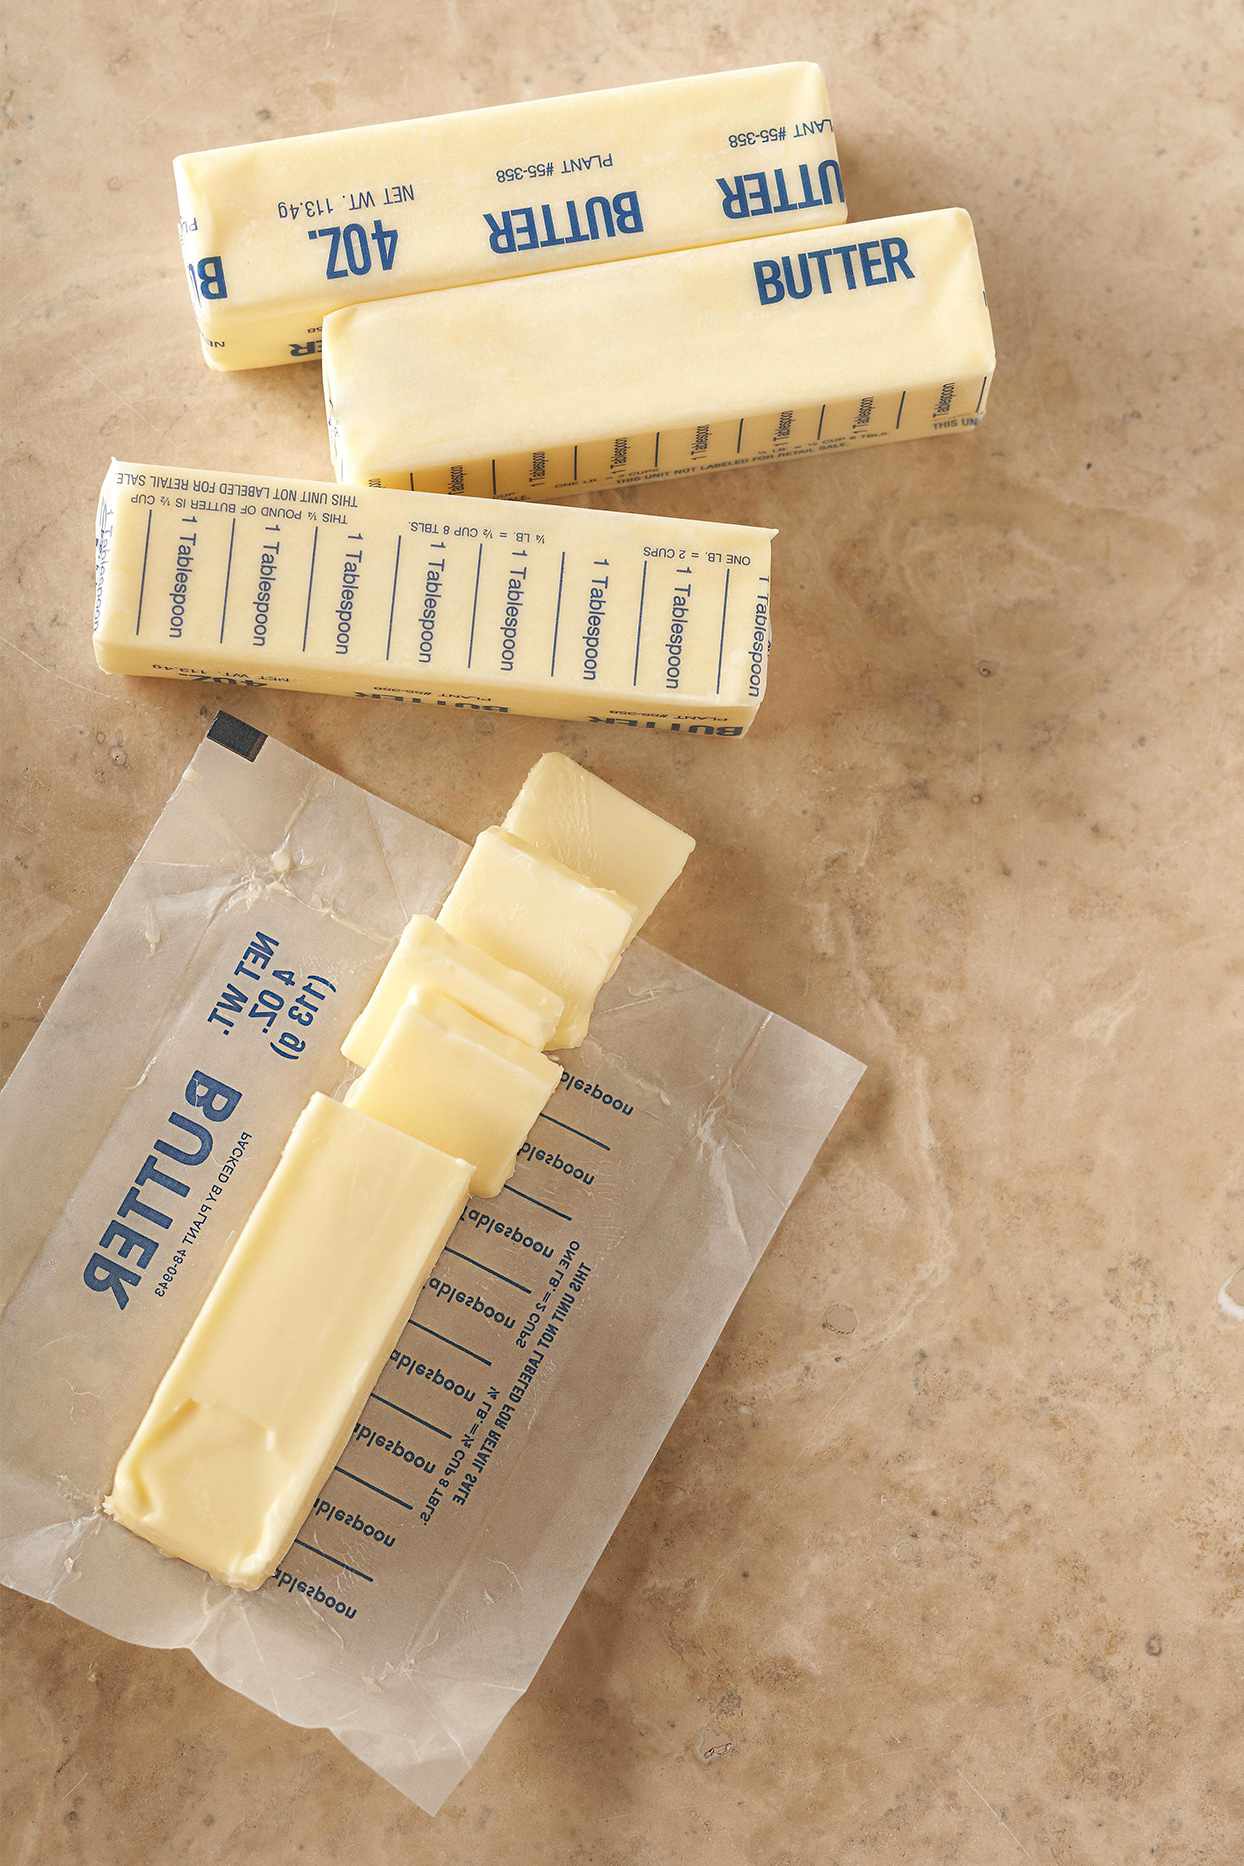 2 sticks butter in grams